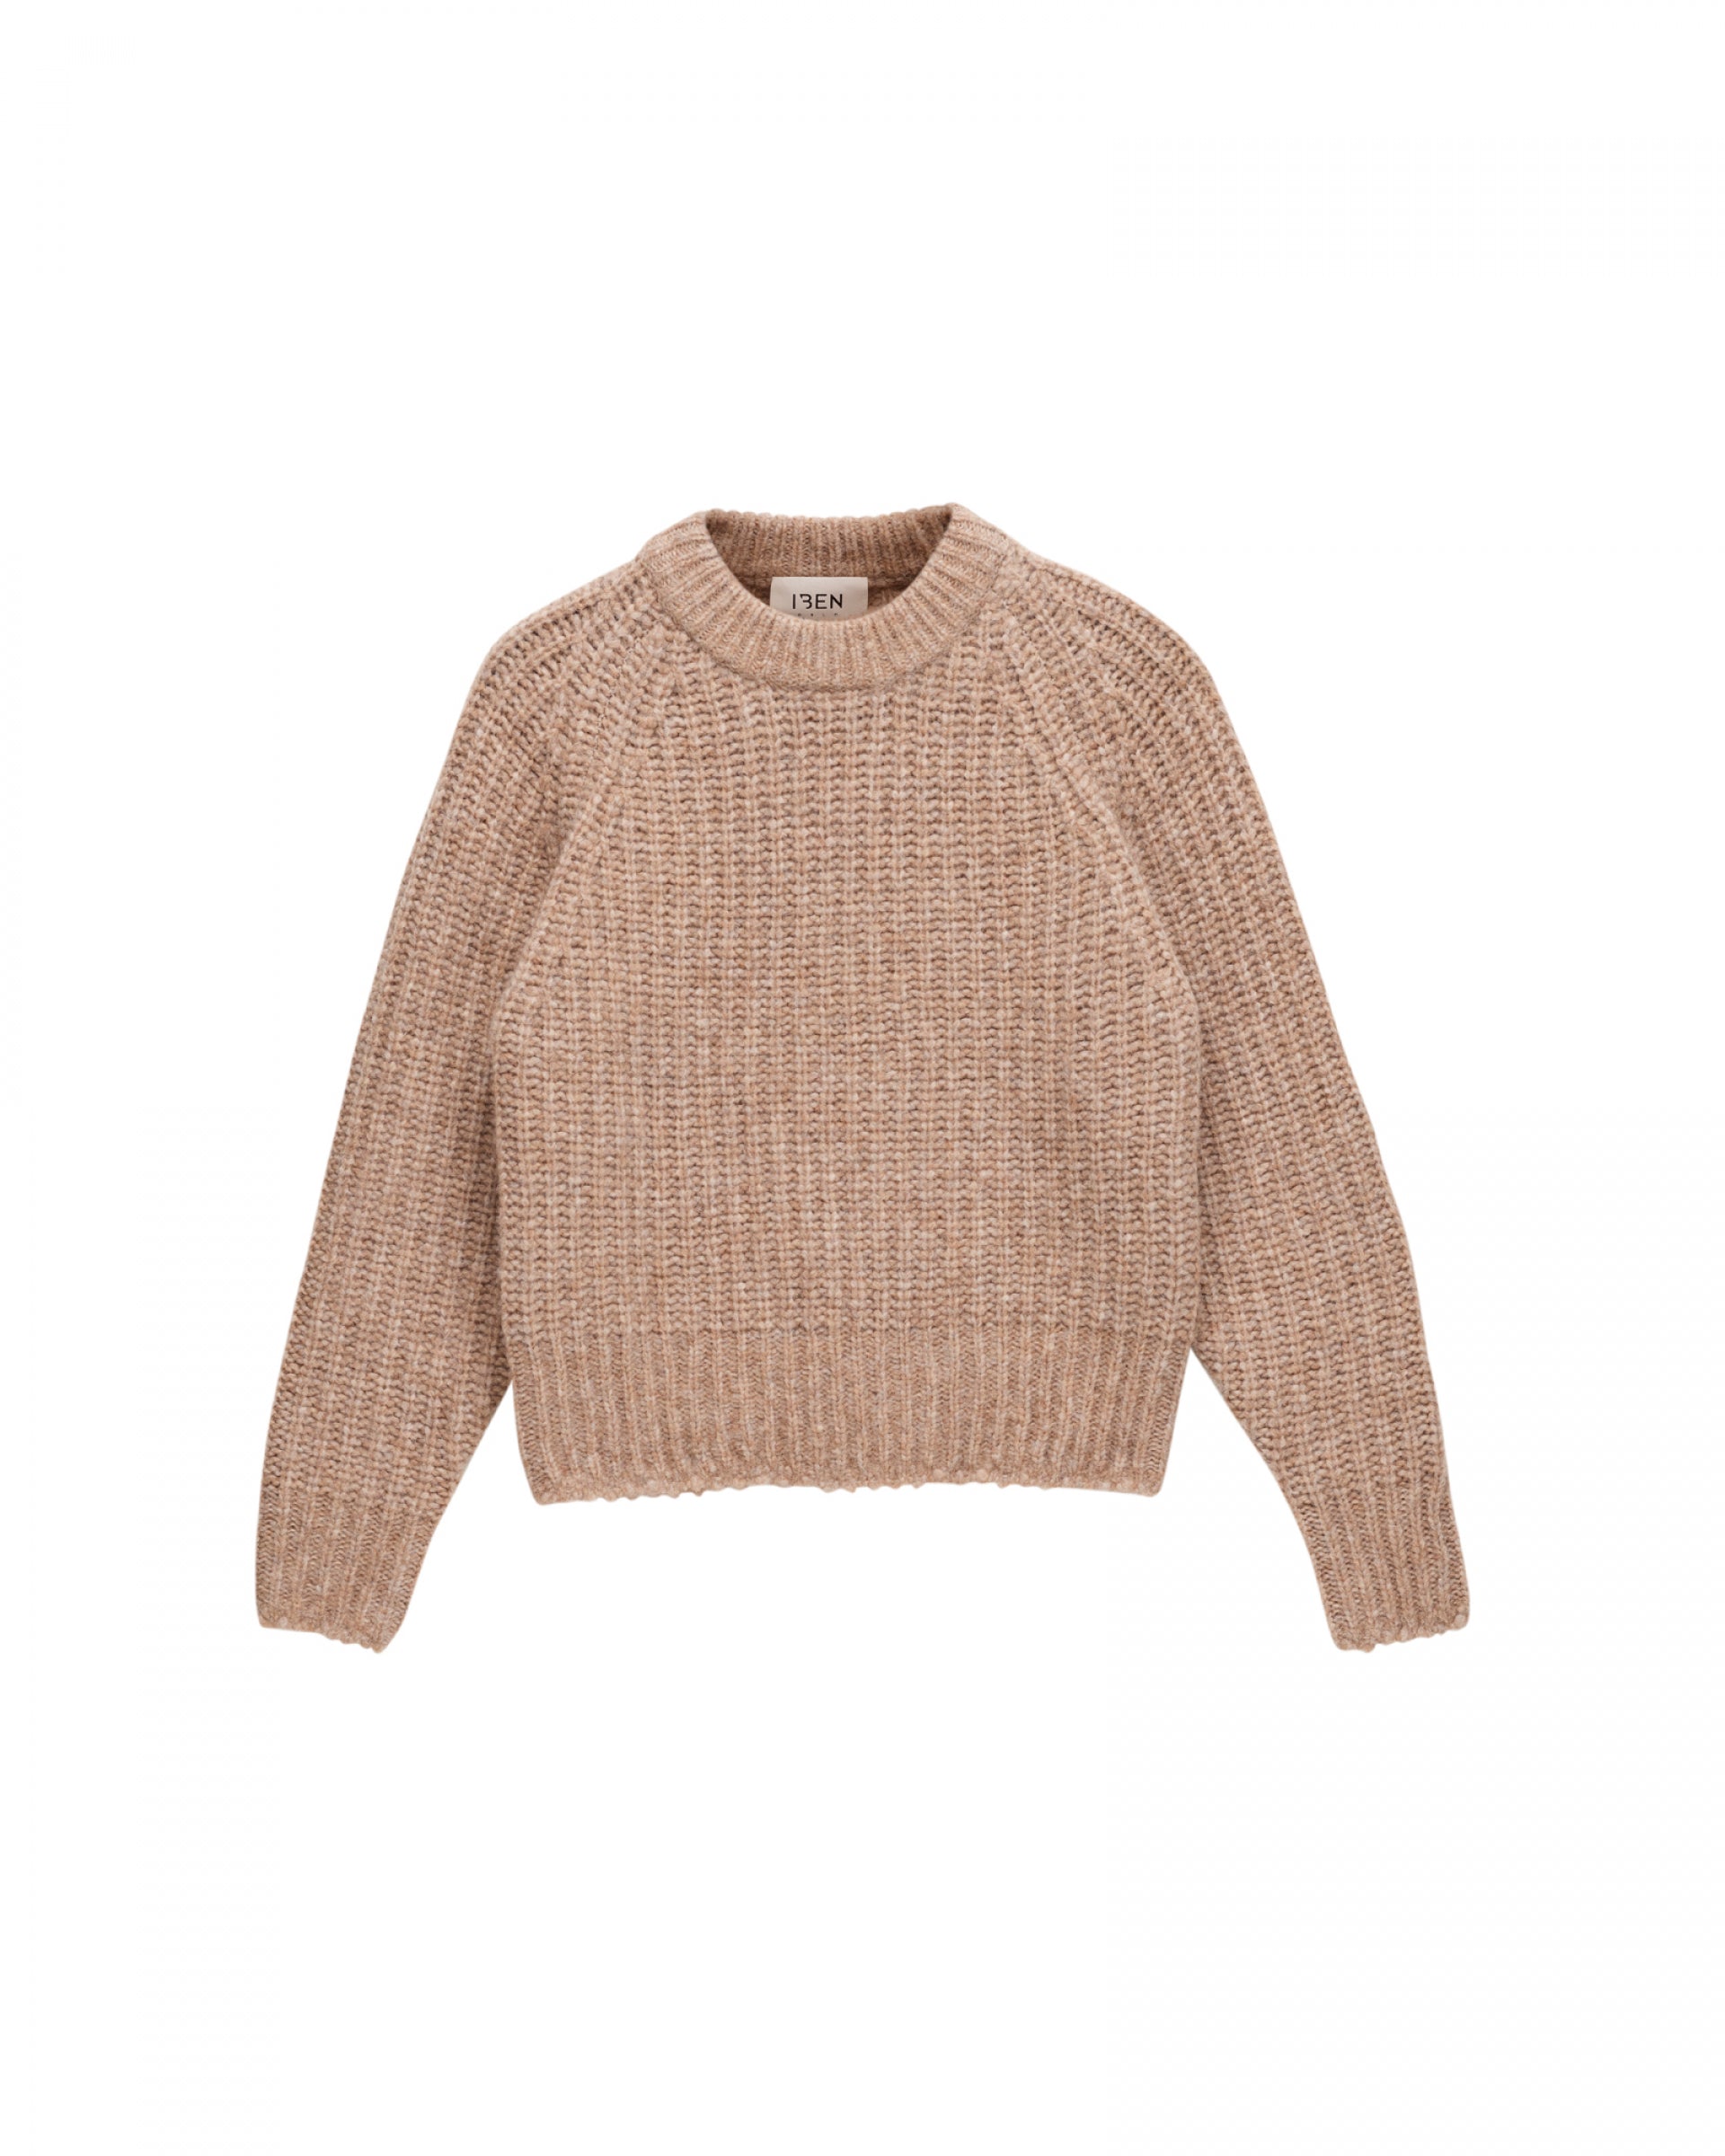 Myles Sweater WRP - Moonlight - IBEN - Gensere - VILLOID.no